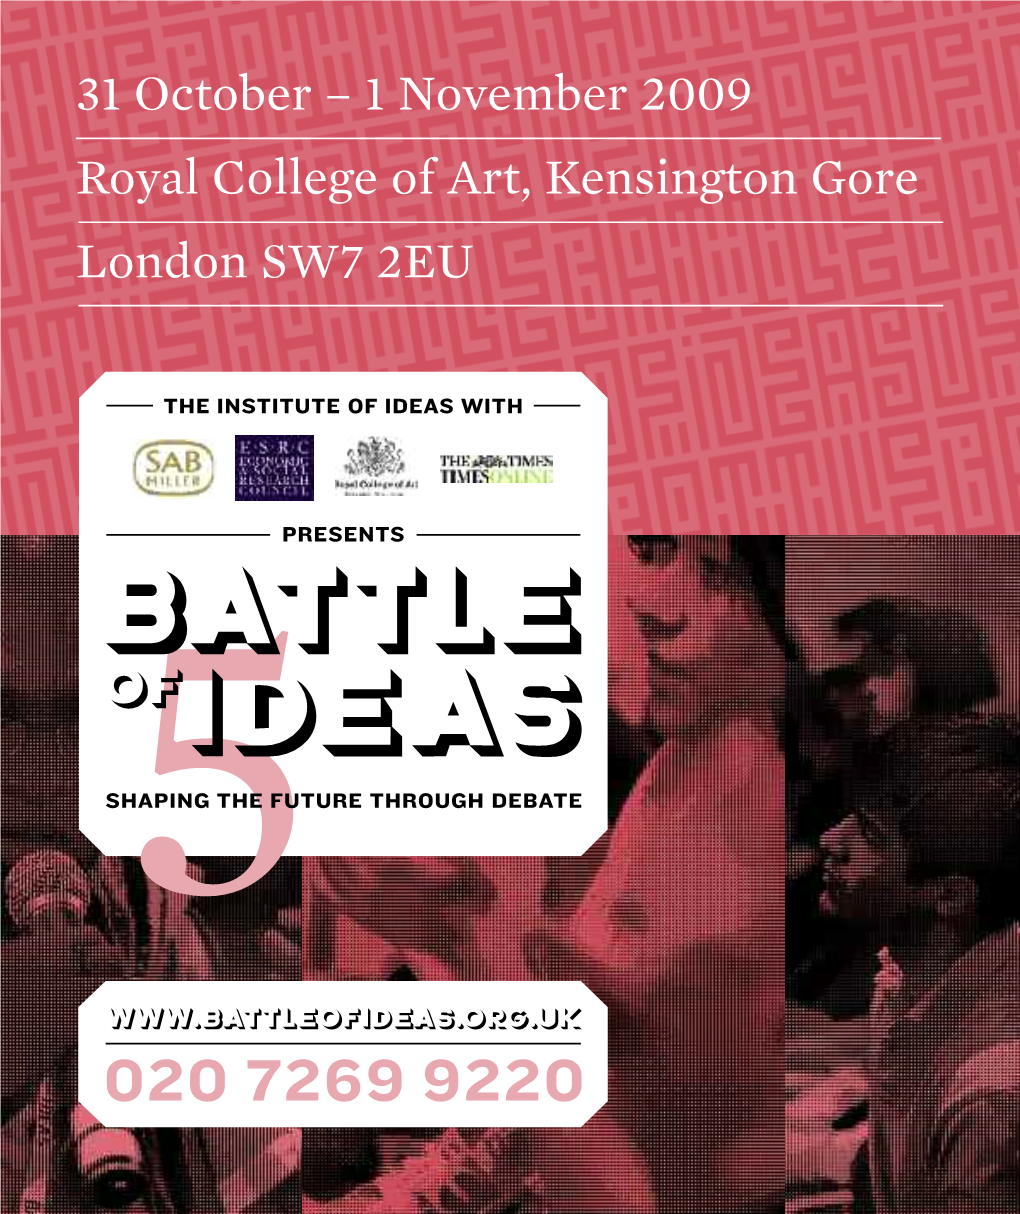 1 November 2009 Royal College of Art, Kensington Gore London SW7 2EU